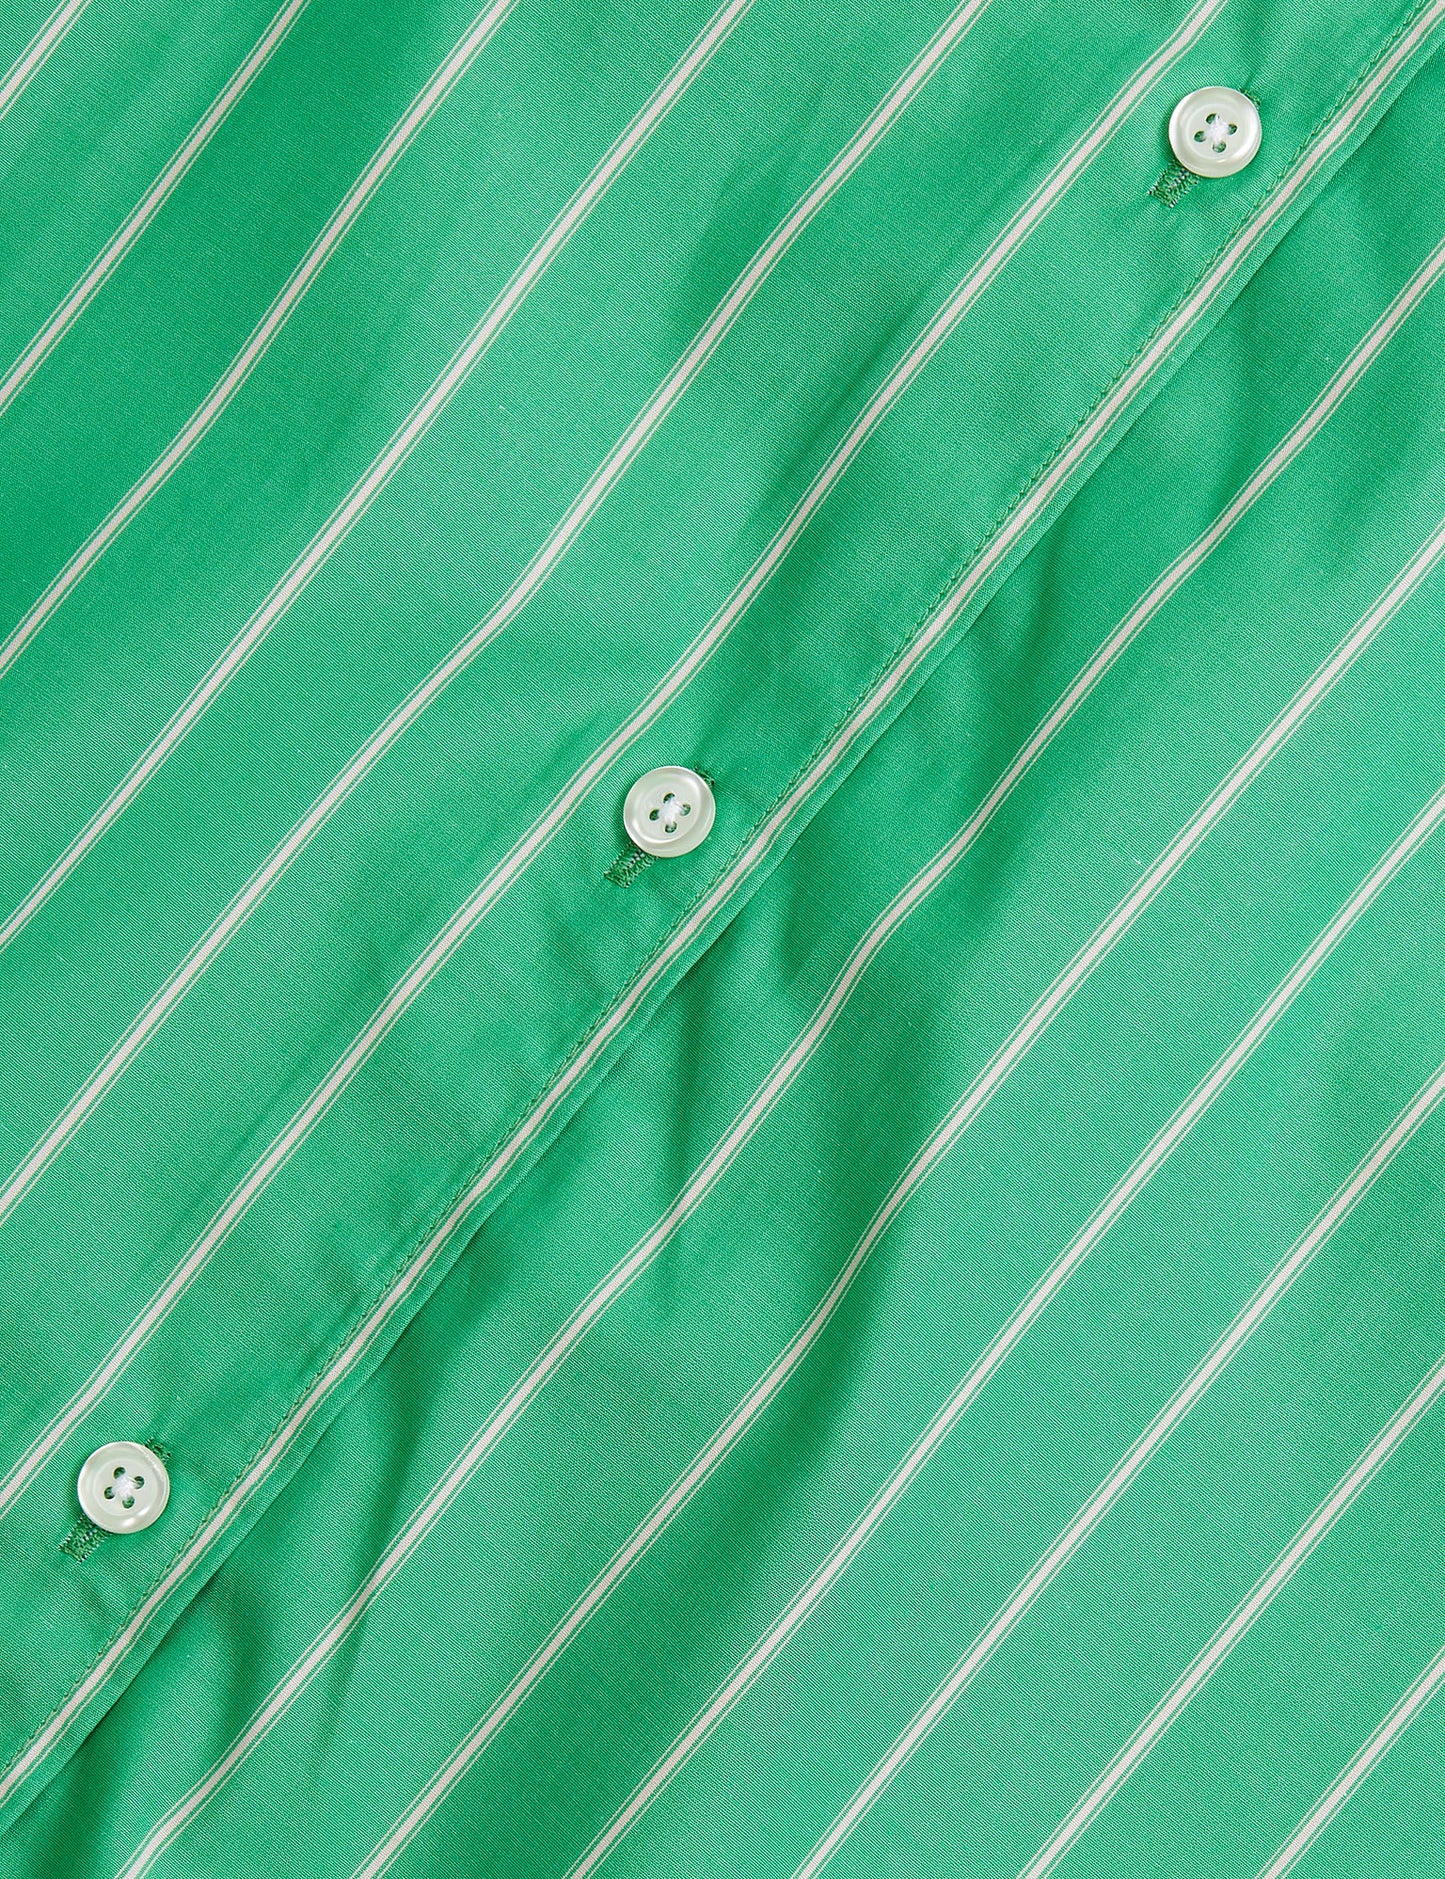 Yarpo Crissy Dress, YD Stripe/Bright Green